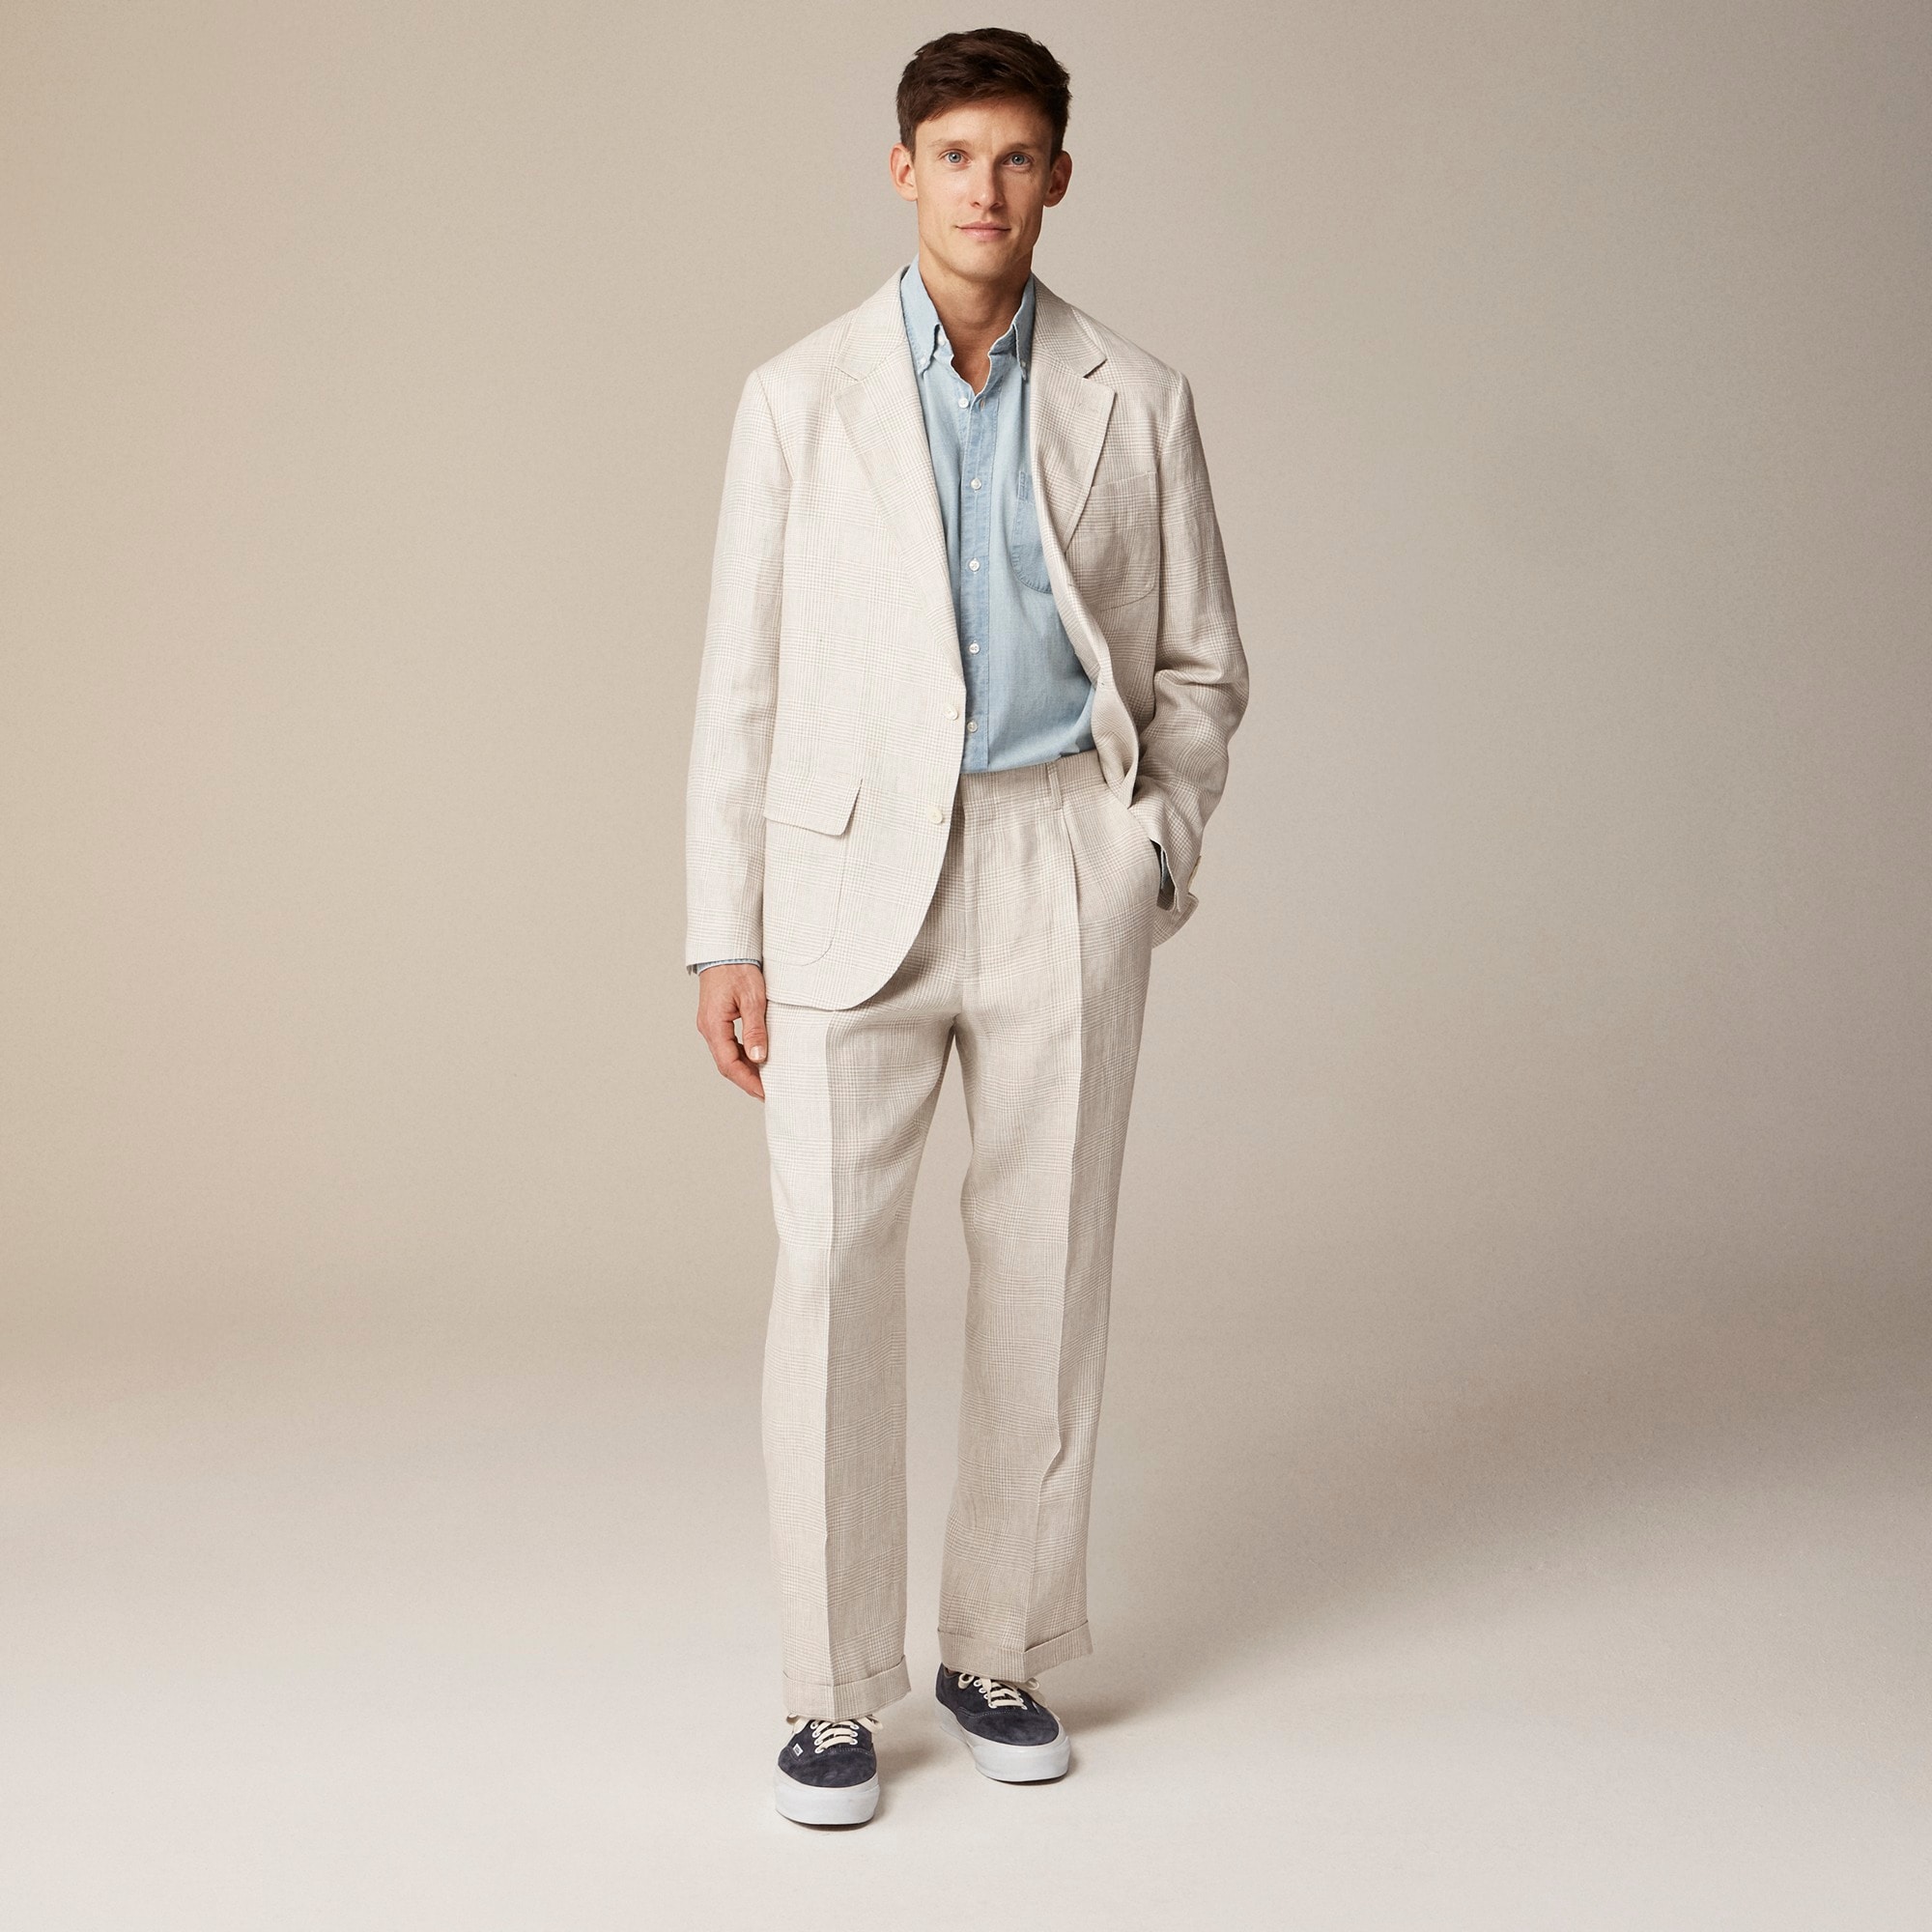  Big-fit unstructured suit jacket in linen twill glen plaid